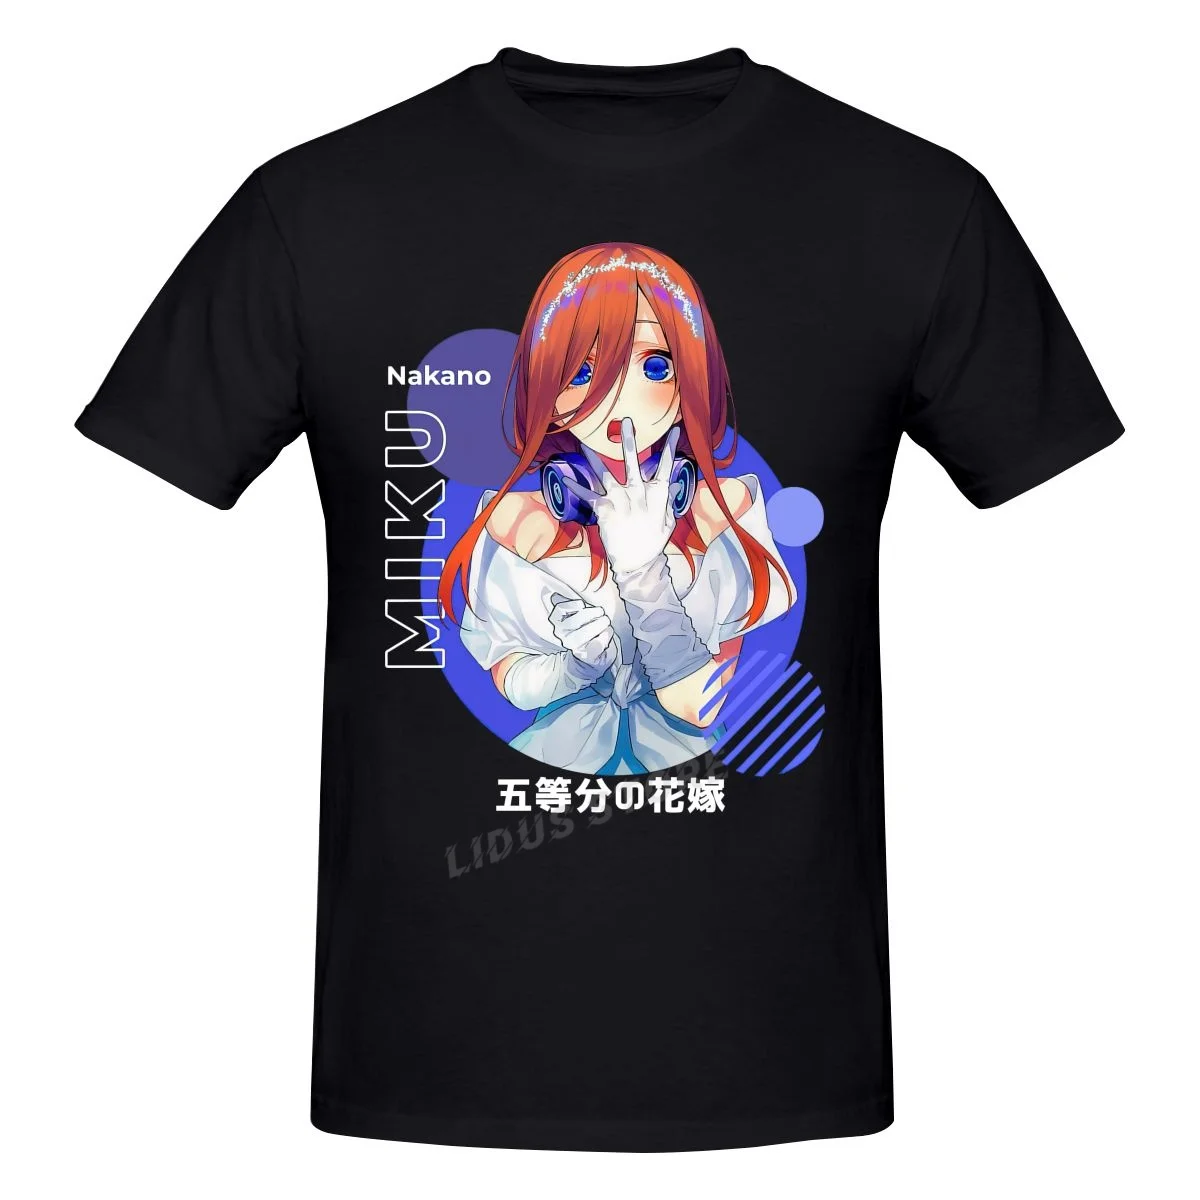 

Japan Anime The Quintessential Quintuplets Miku Nakano 5 Toubun No Hanayome T shirt Harajuku Clothing T-shirt Tshirt Tee Tops